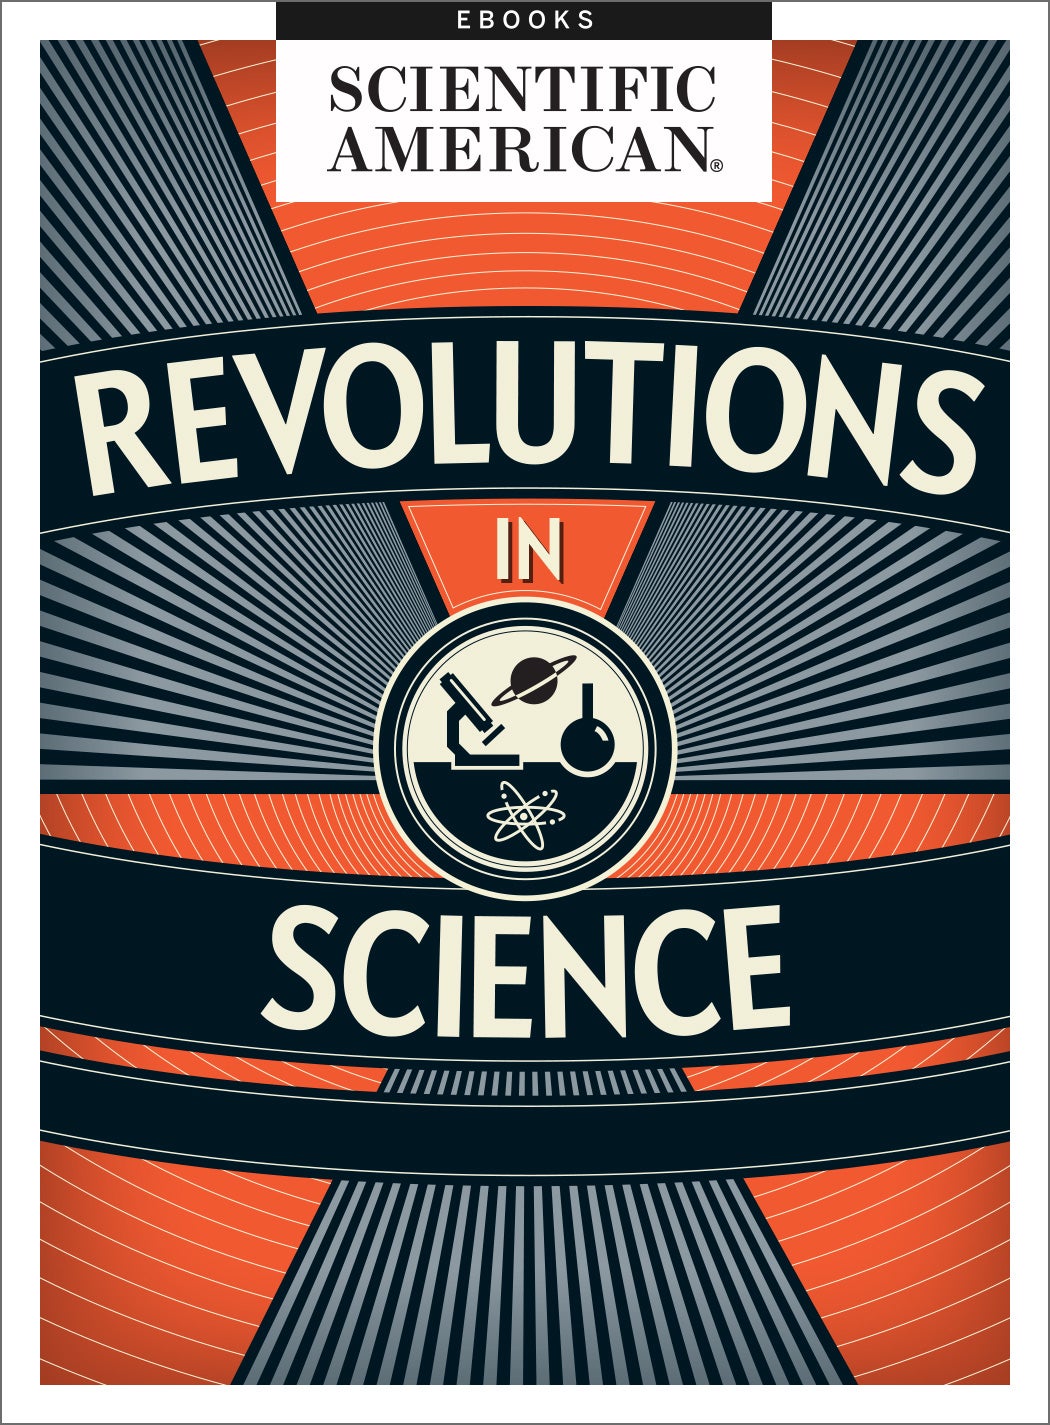 Revolutions in Science